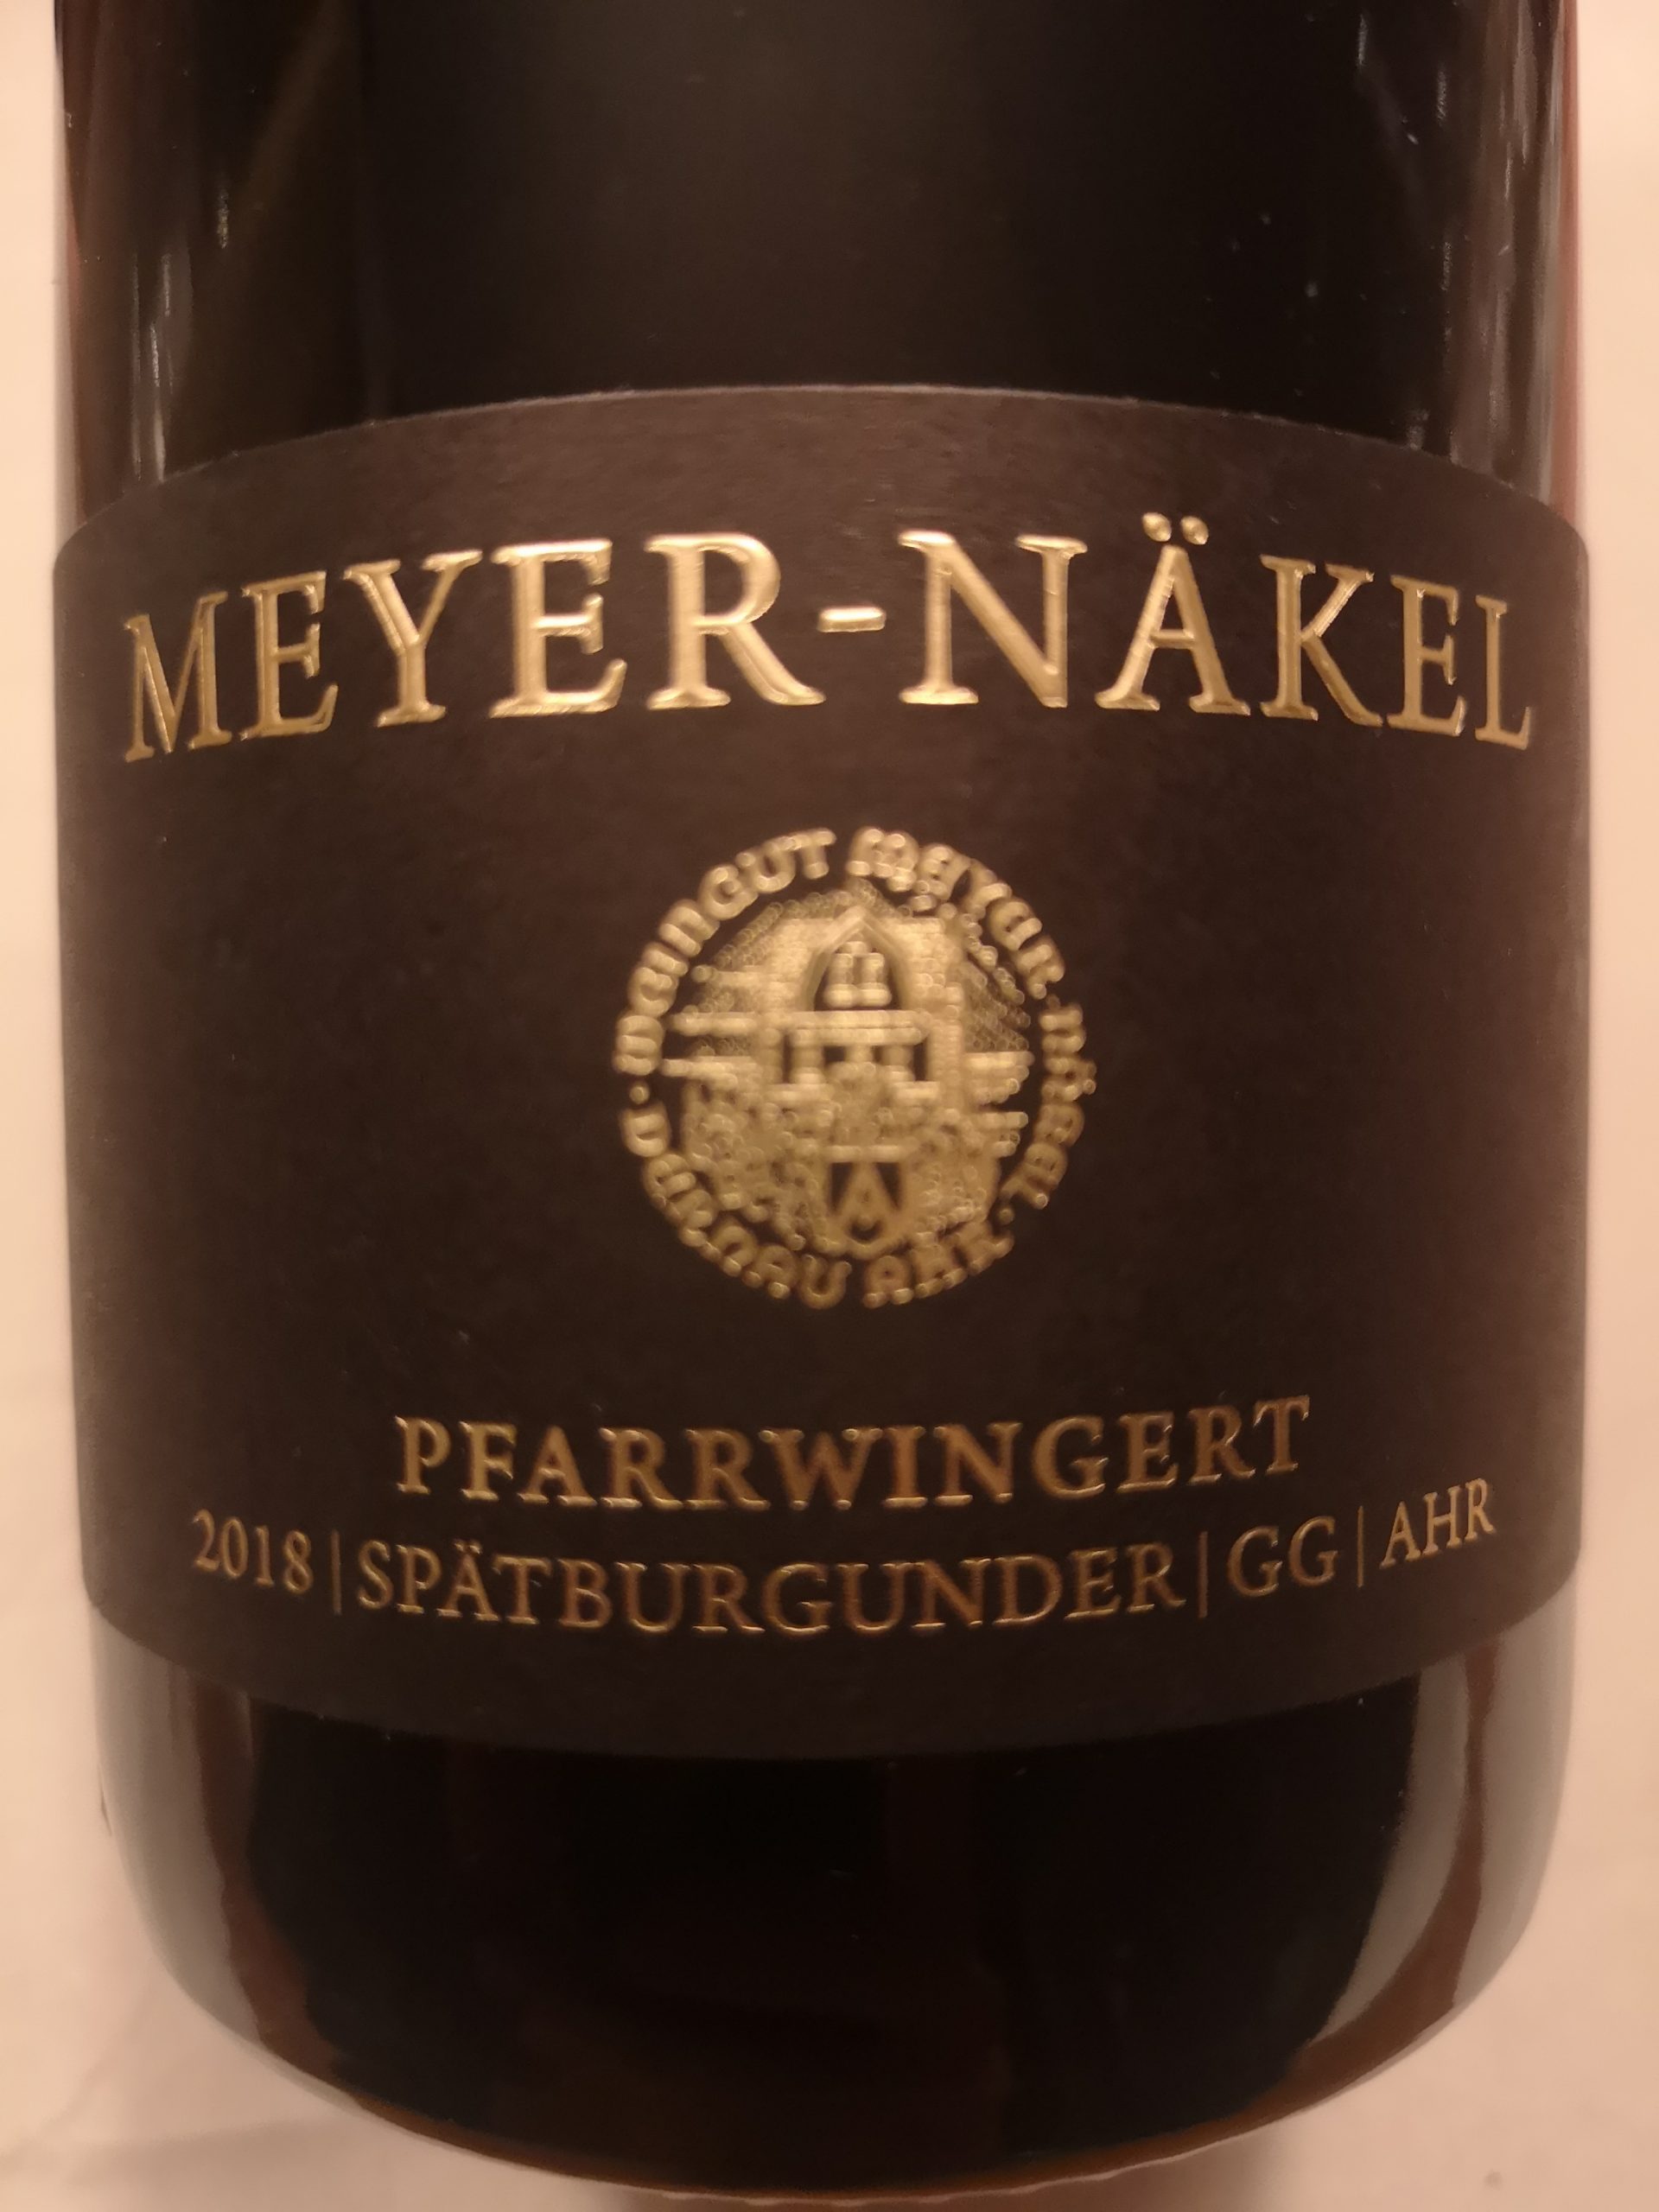 2018 Spätburgunder Dernauer Pfarrwingert | Meyer-Näkel